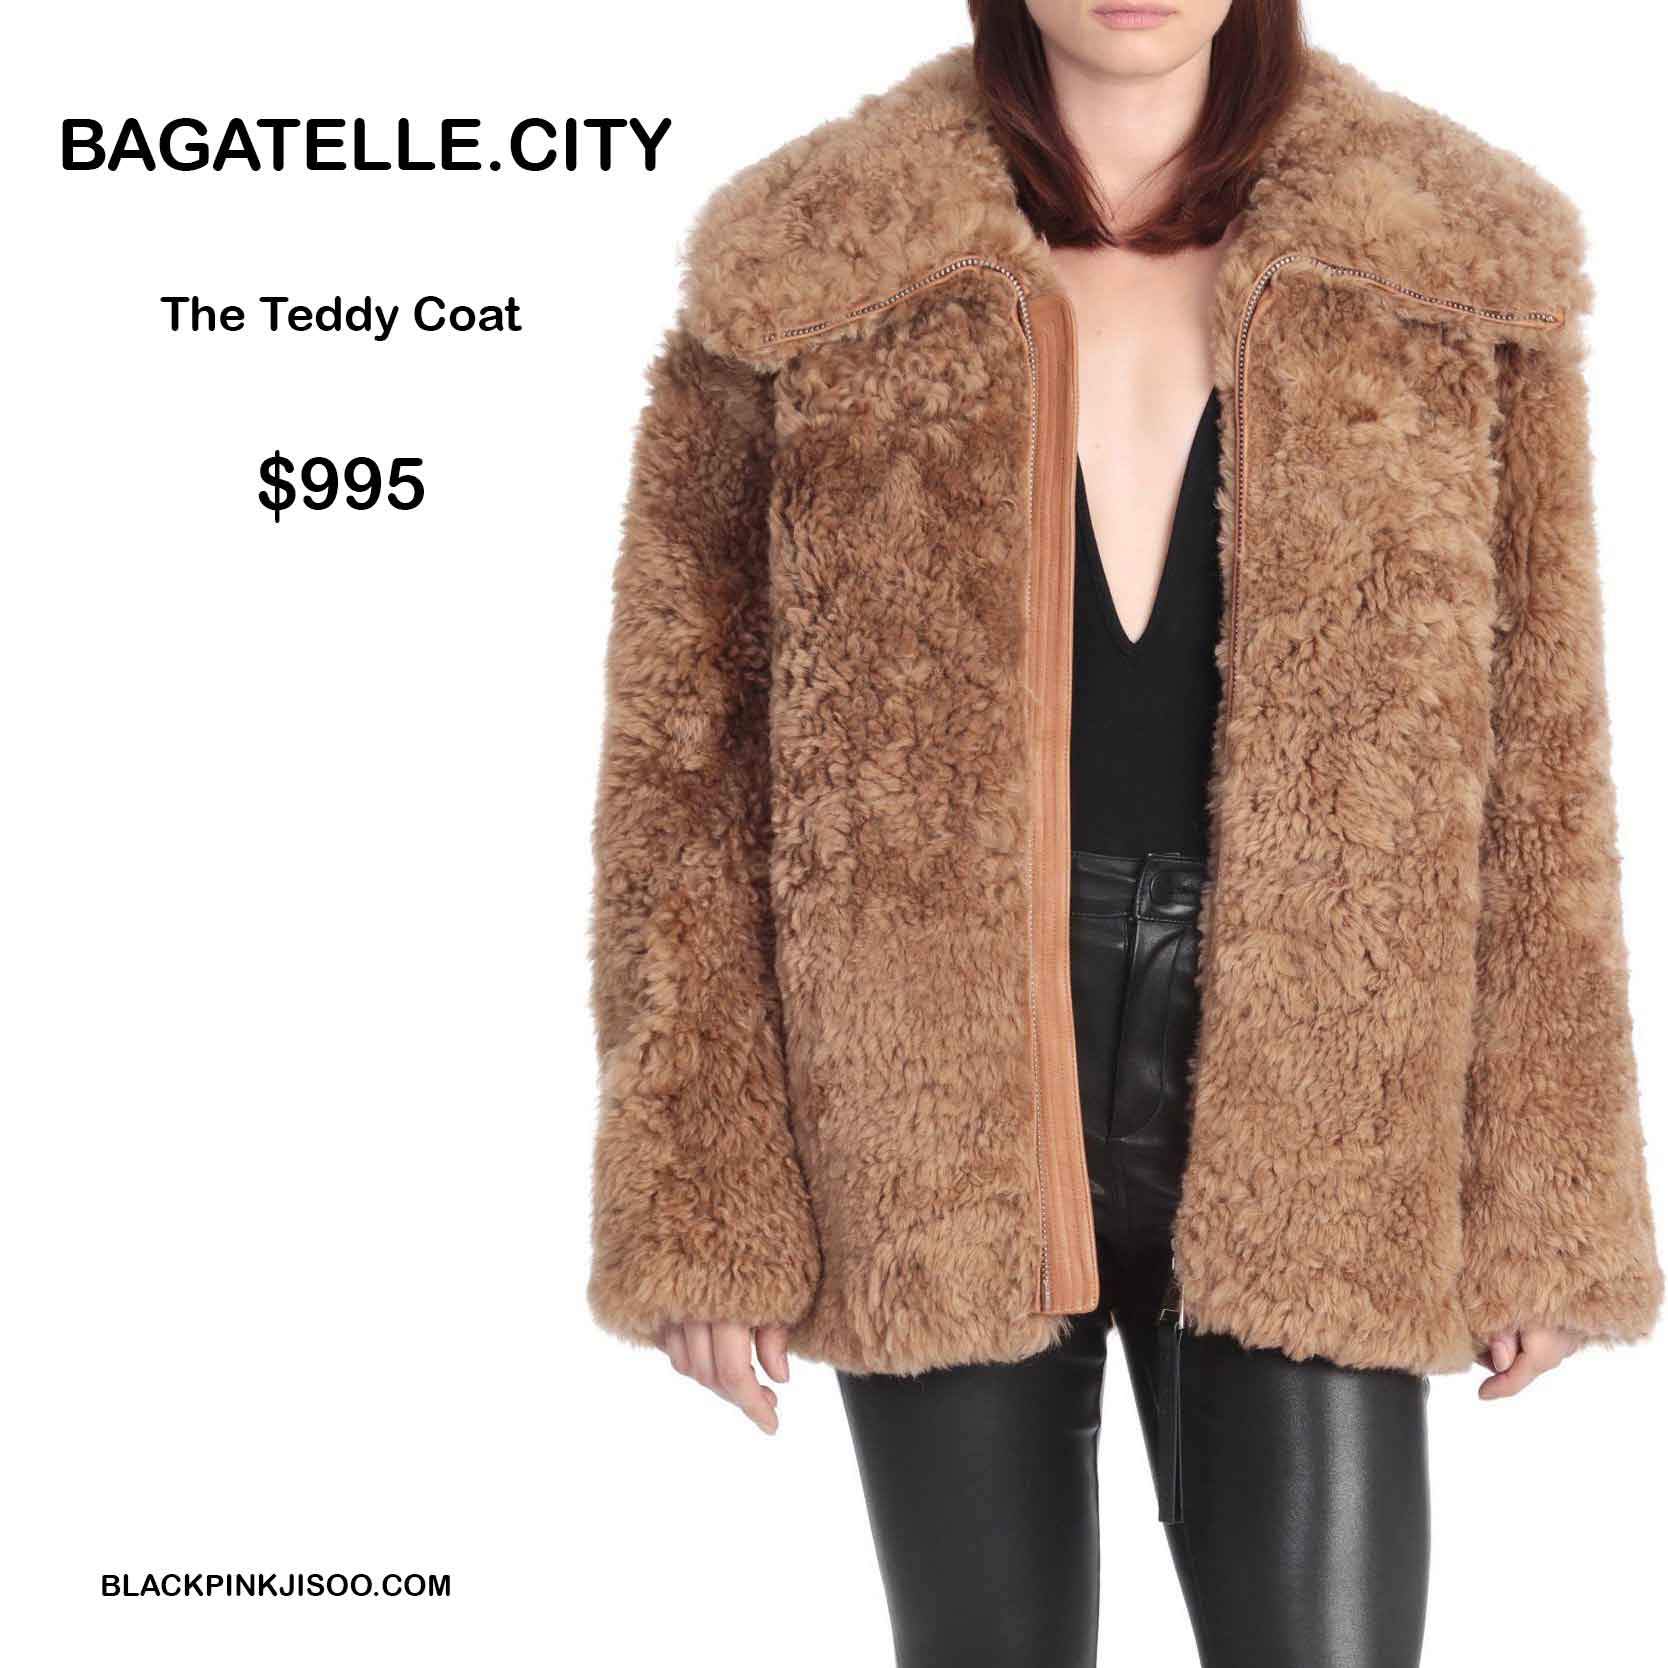 Bagatelle City Teddy Coat